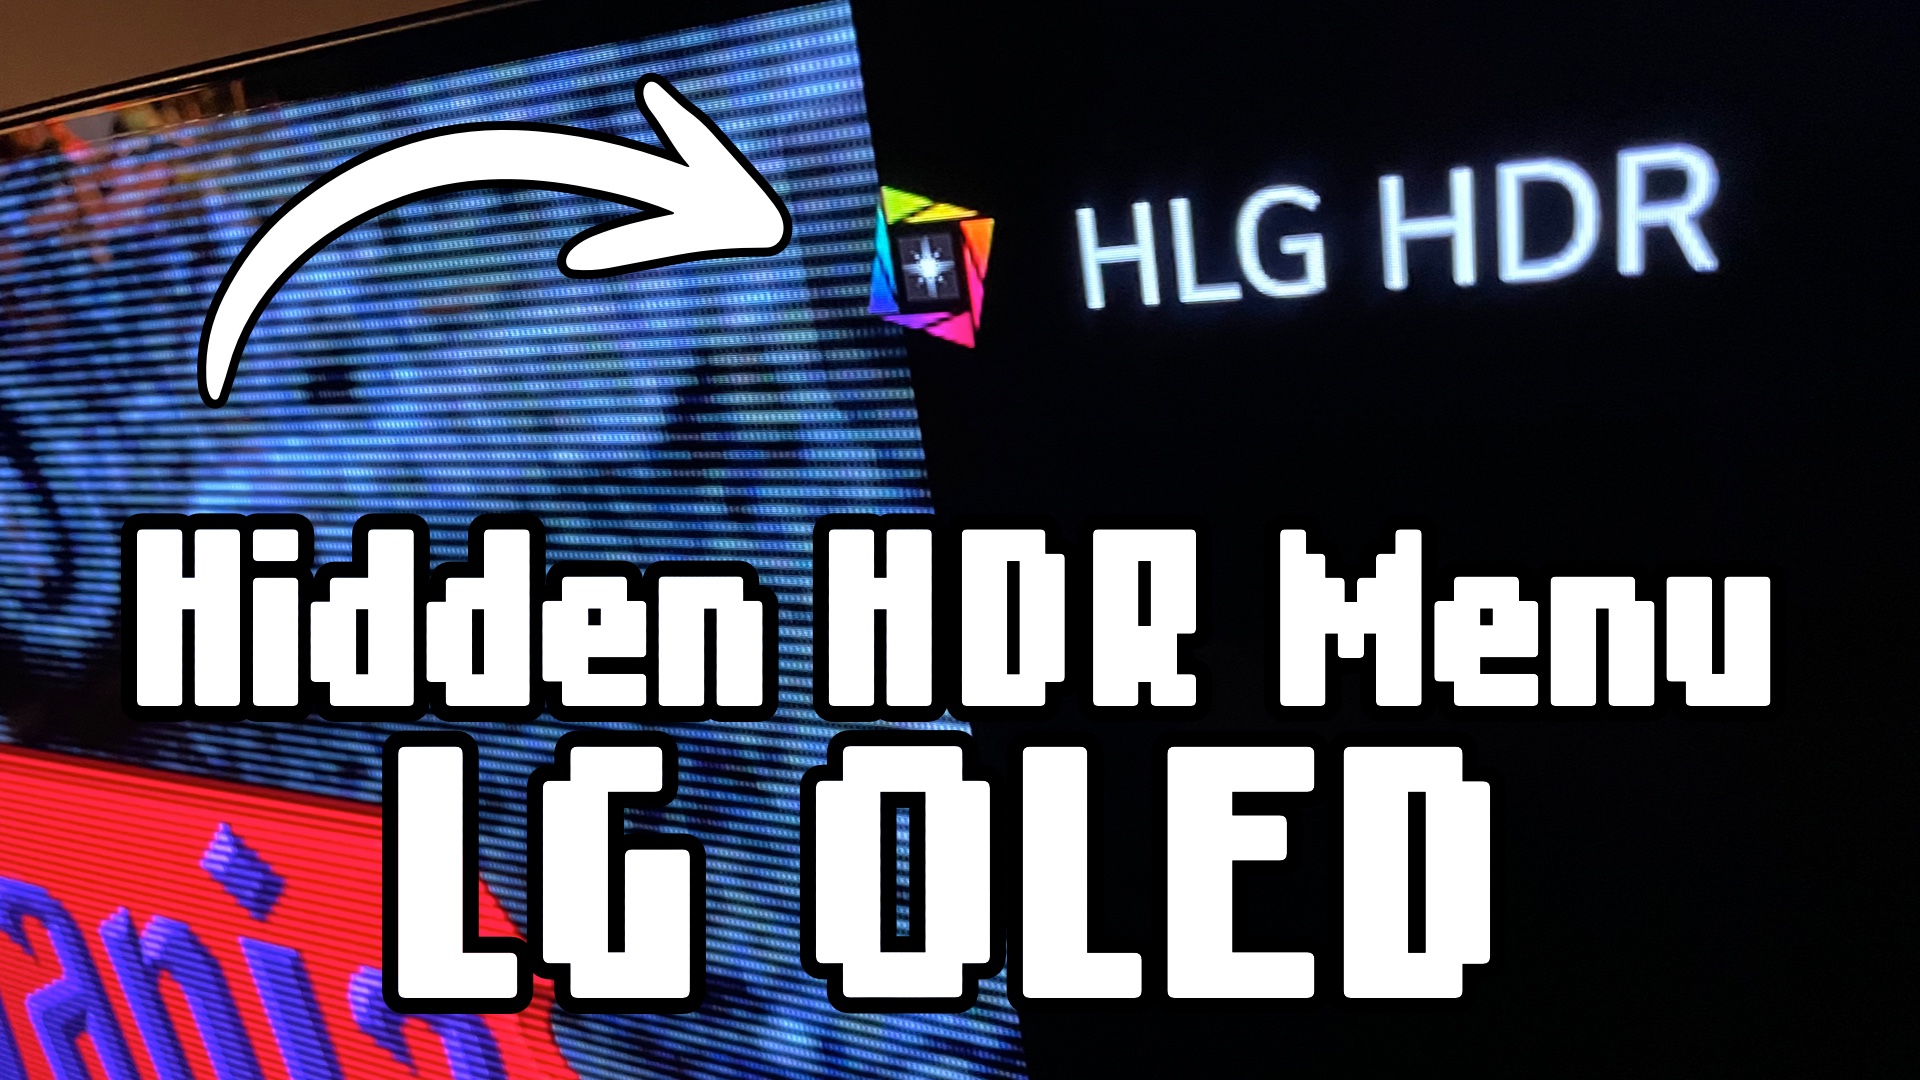 LG TV] - Tips & (Hidden) Tricks on the Magic Remote (WebOS22) 